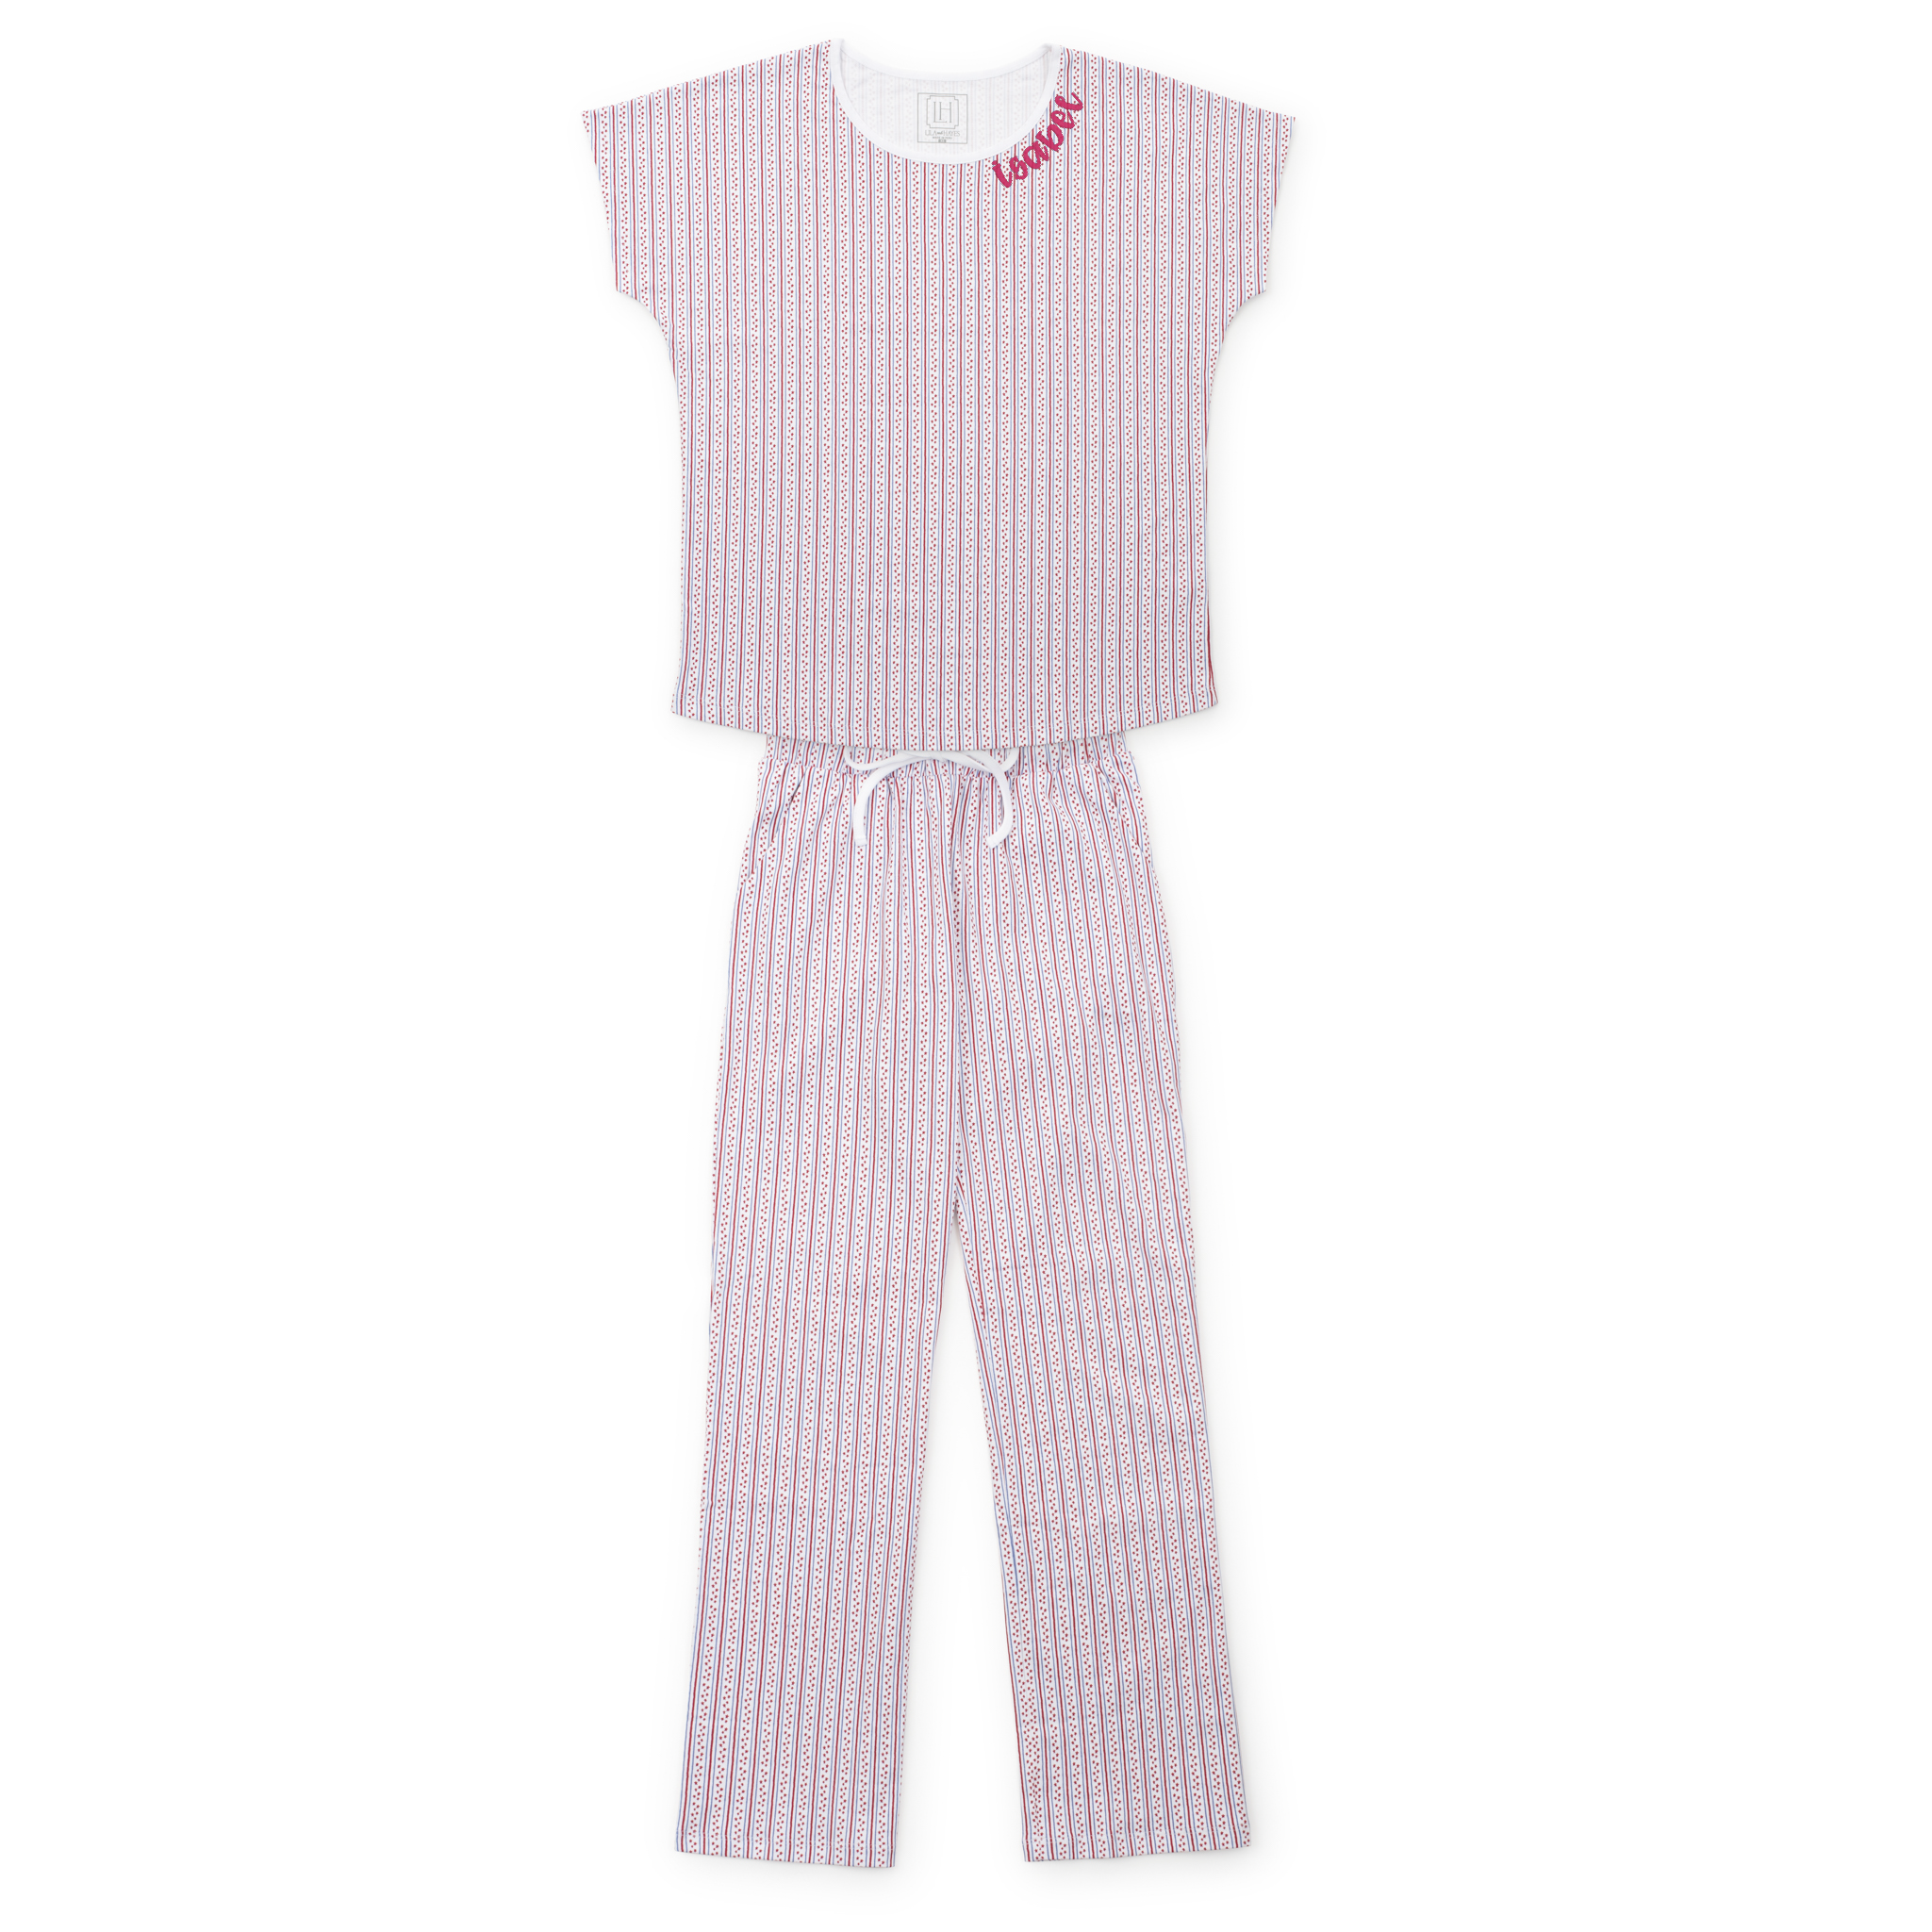 Marcia Women's Pima Cotton Pajama Pant Set - Stars and Stripes